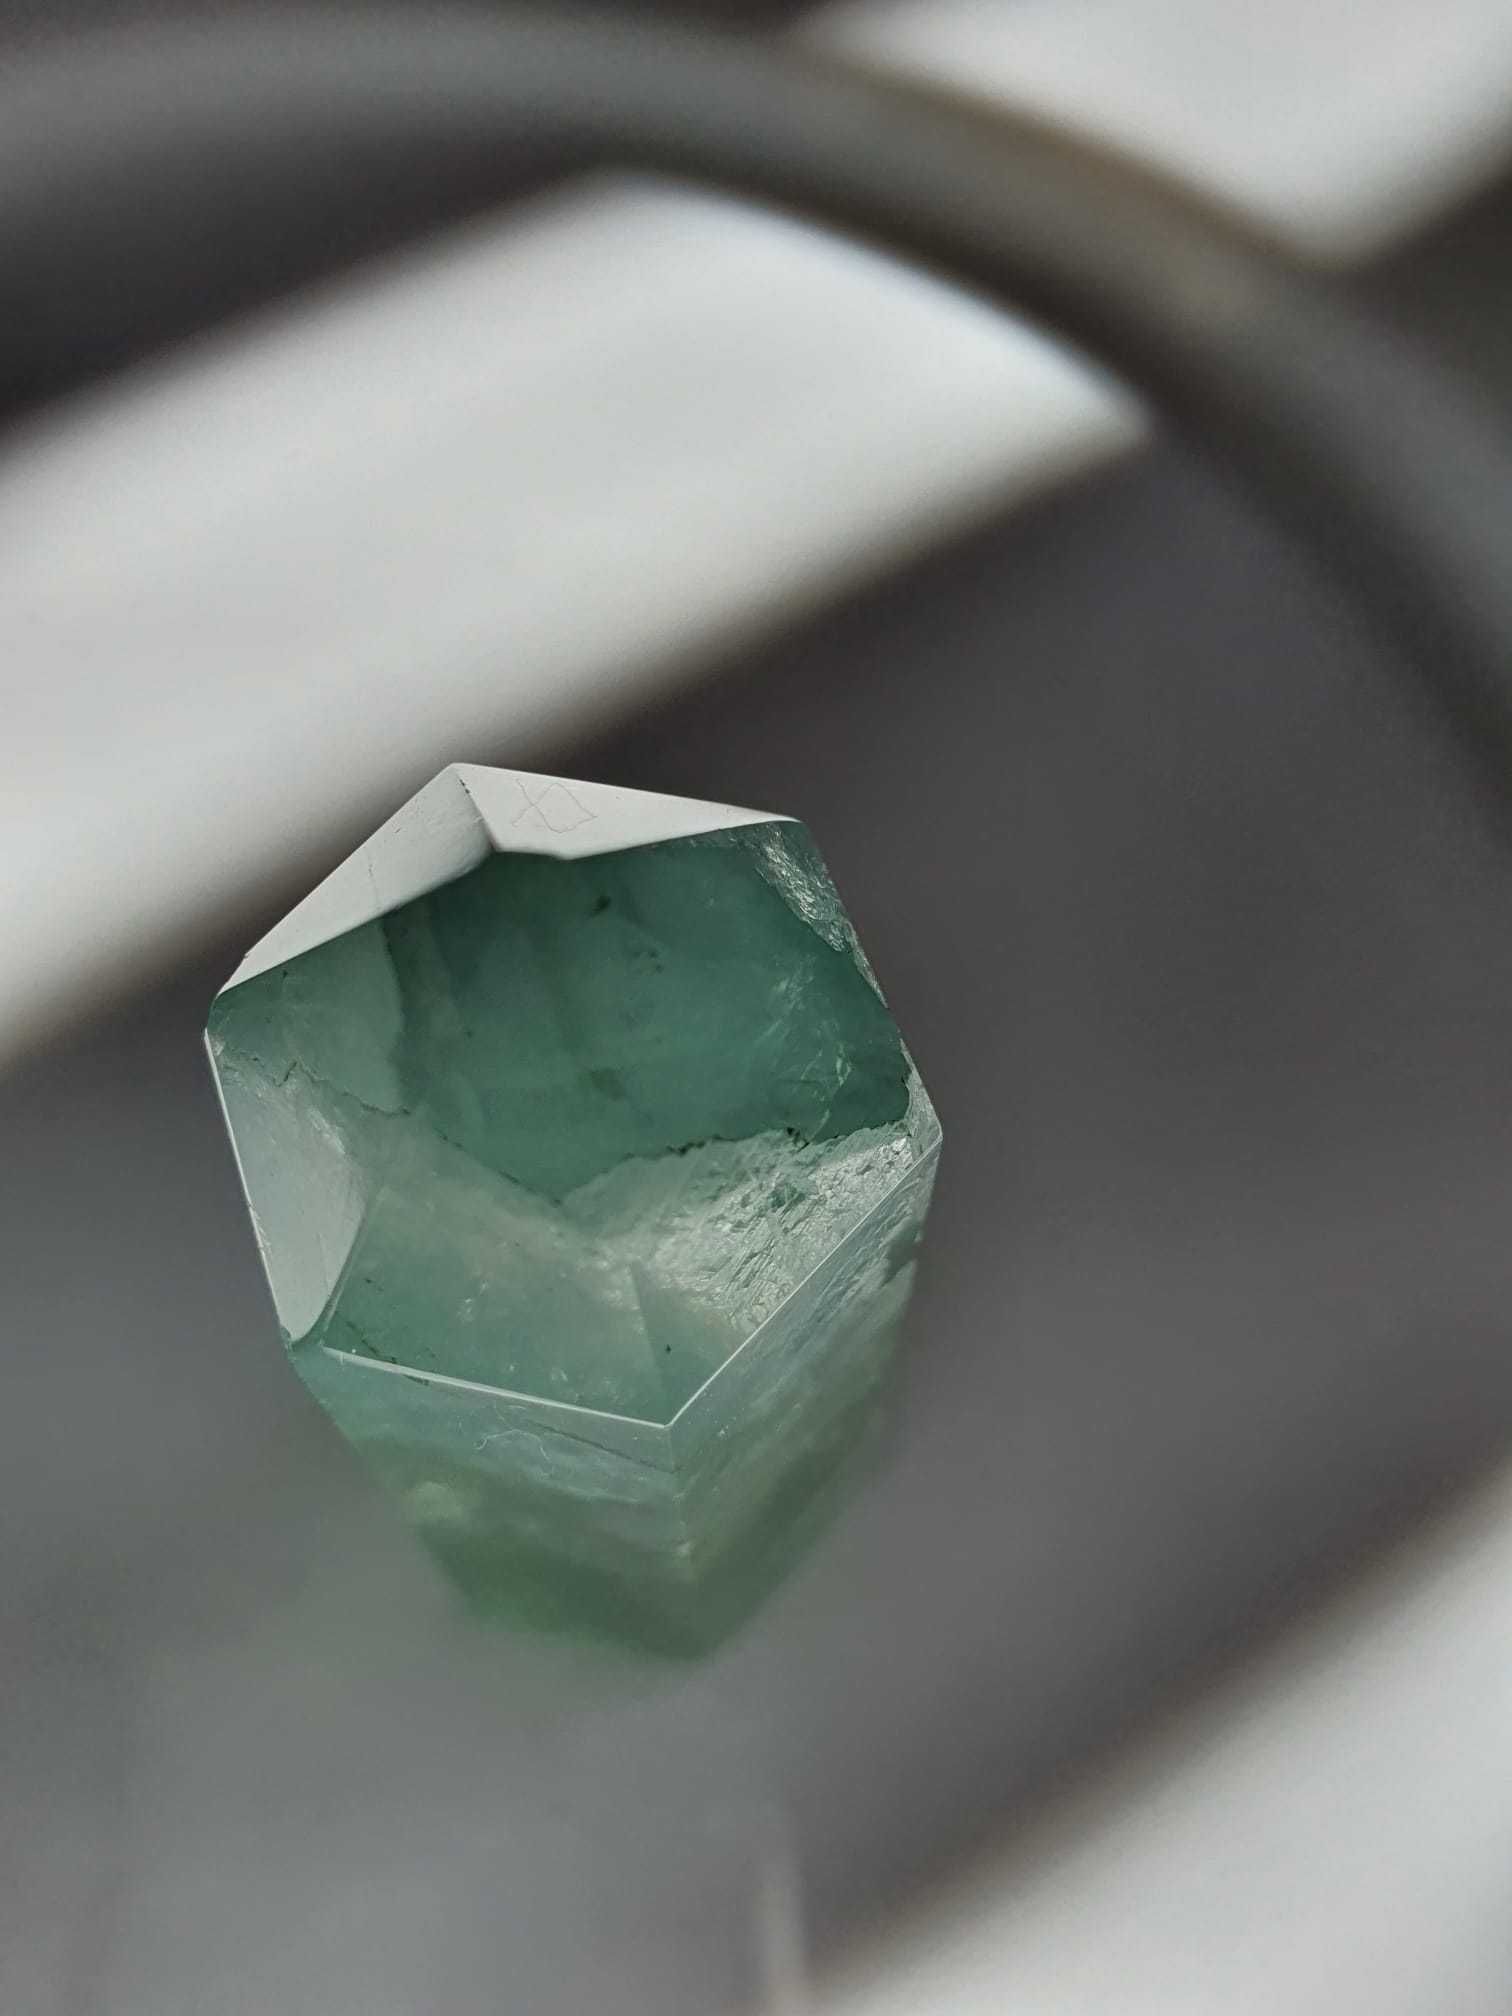 Floare de mina, mineral hexagonal verde transparent